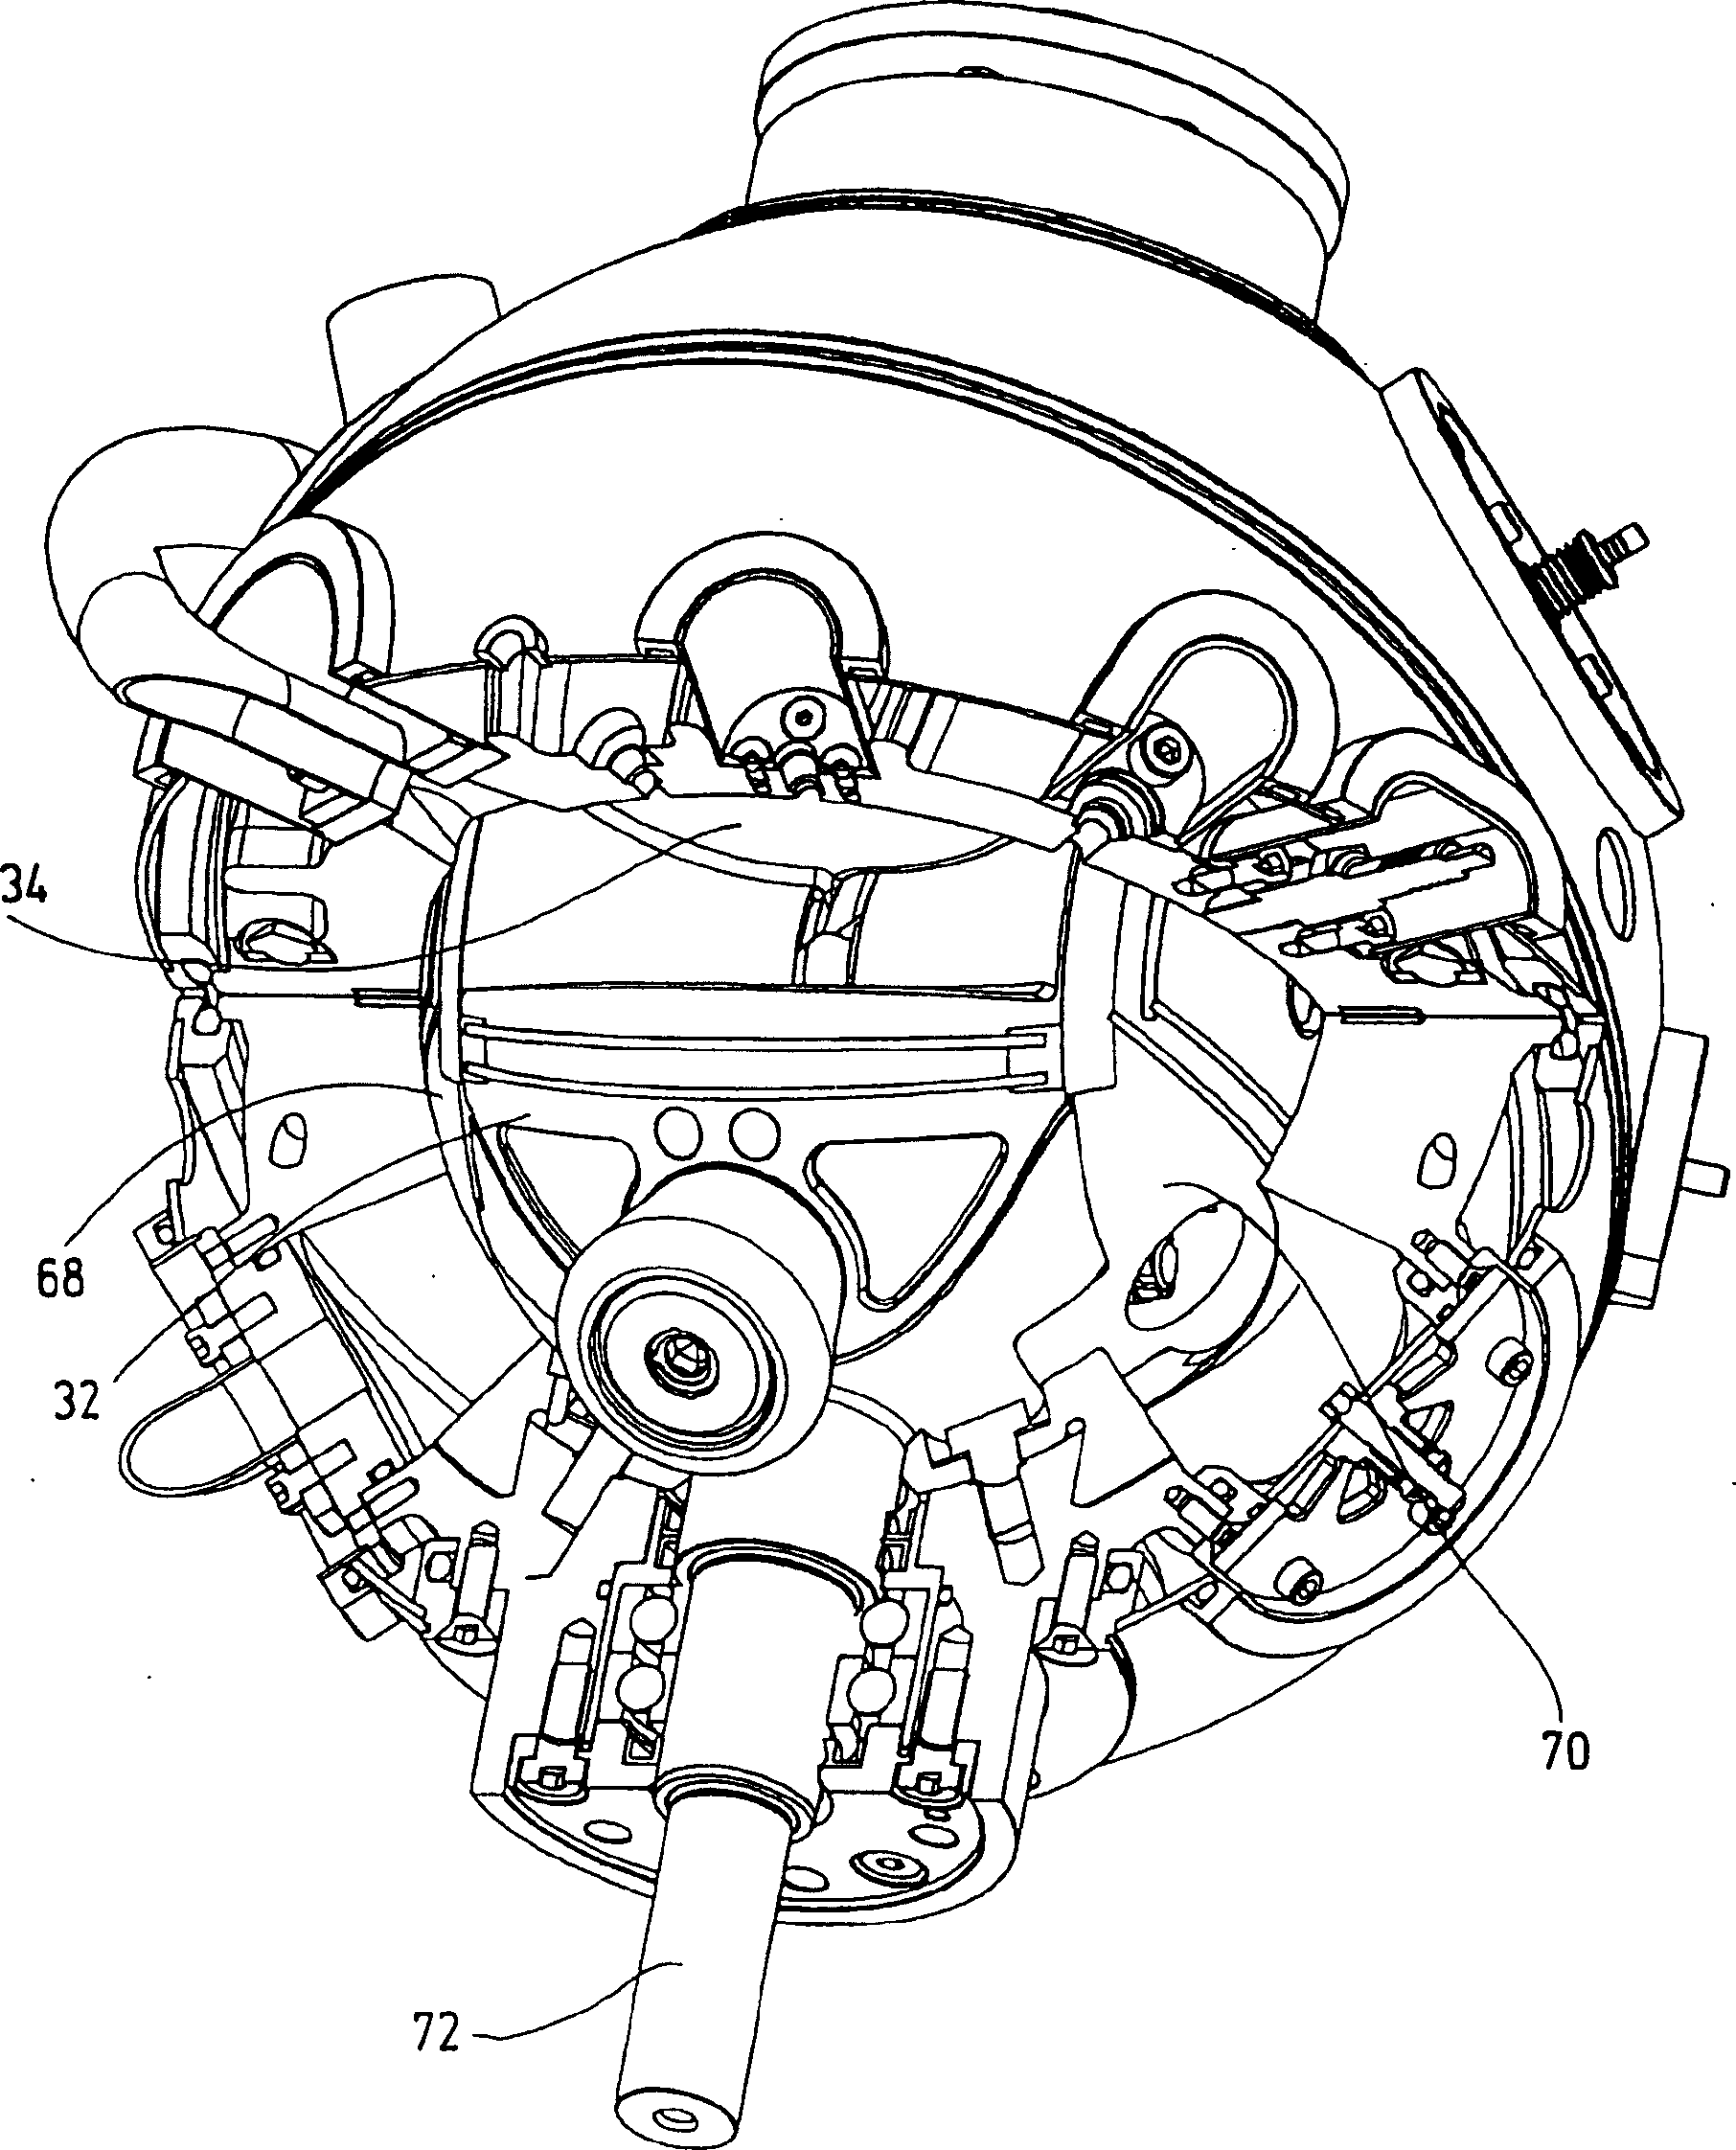 Pivoting piston engine